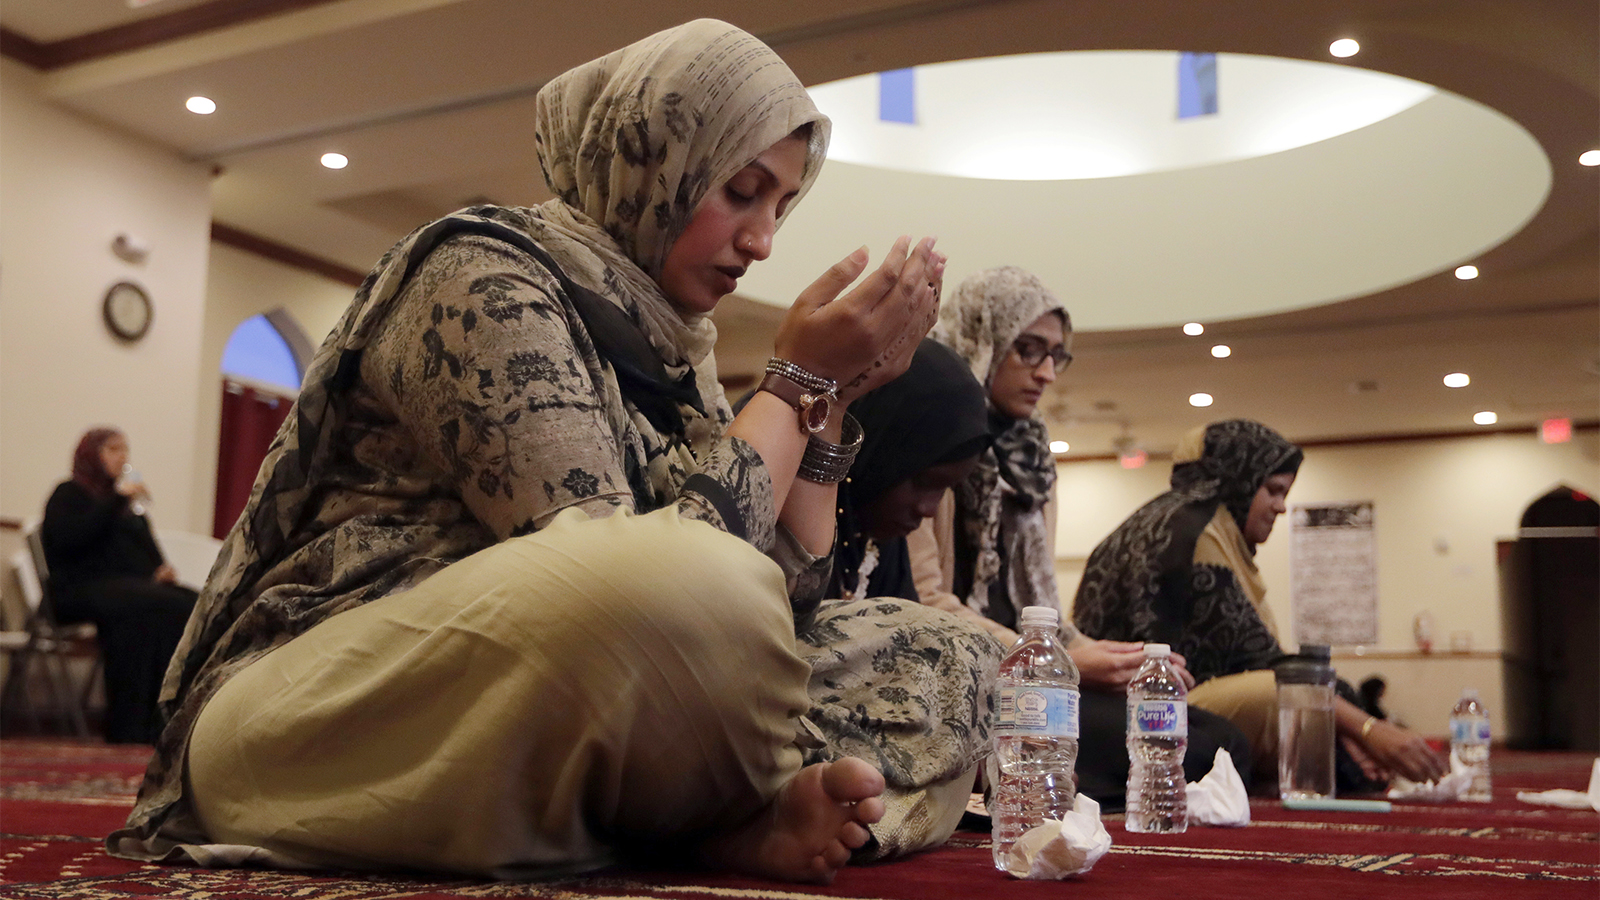 Sexmuslim 16sal - For many Muslims, Ramadan is a built-in digital detox program